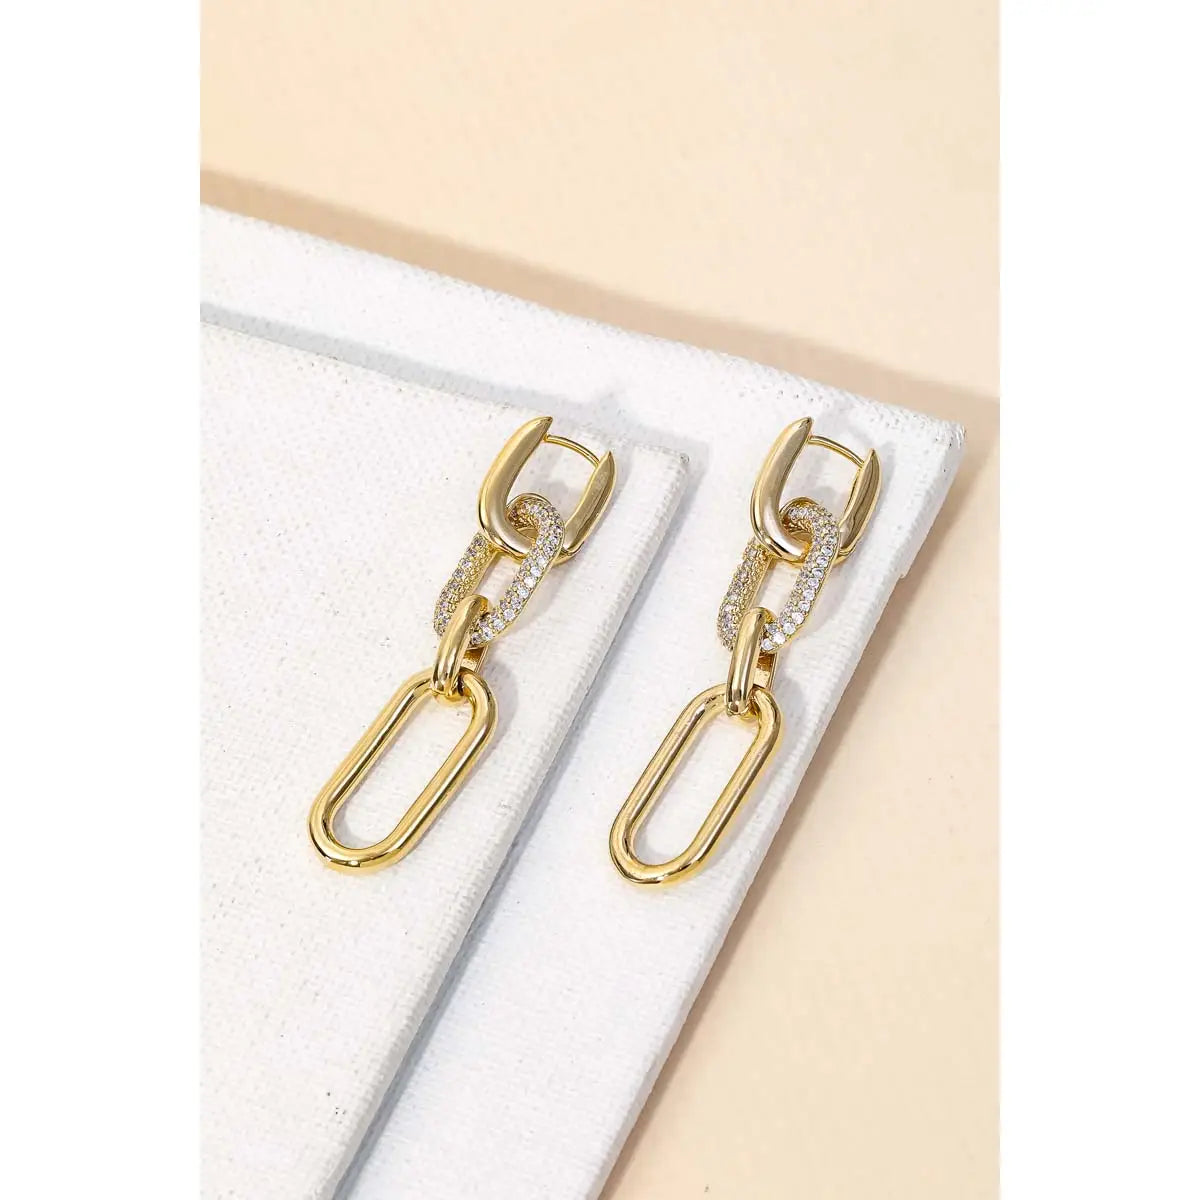 Metallic Oval Chain Link Dangle Earrings